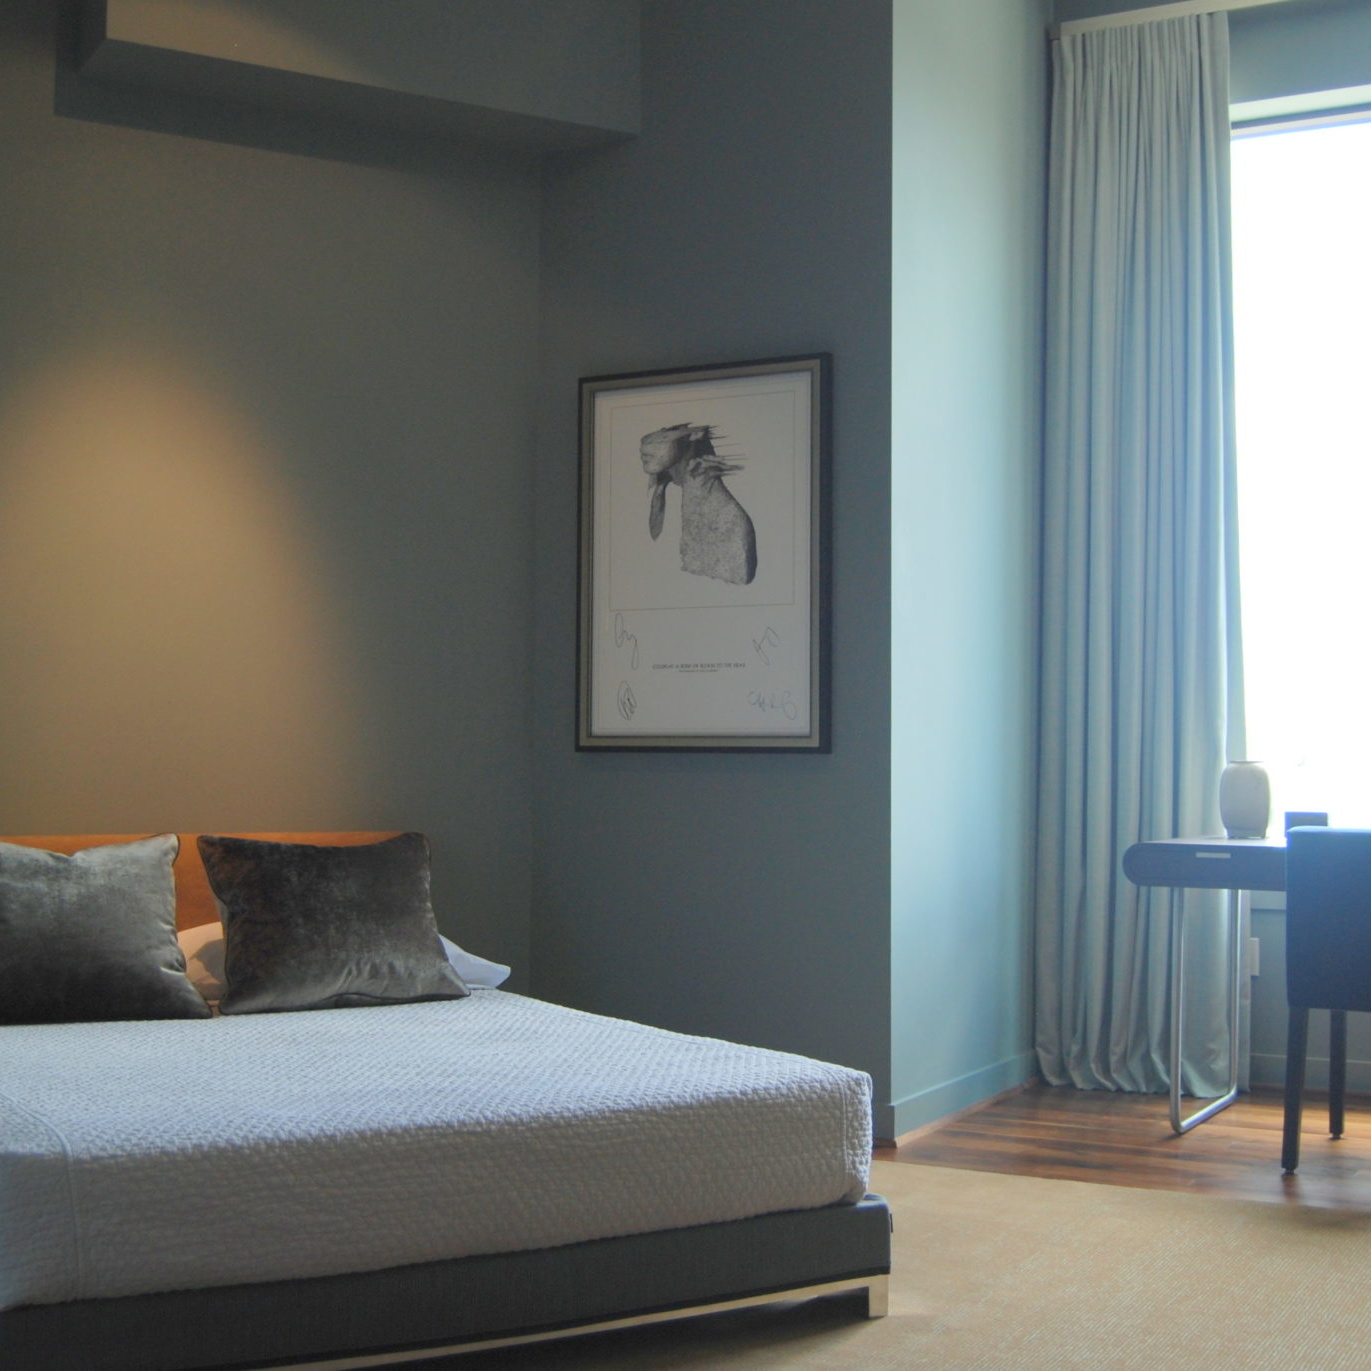 Blue and white bedroom interior design